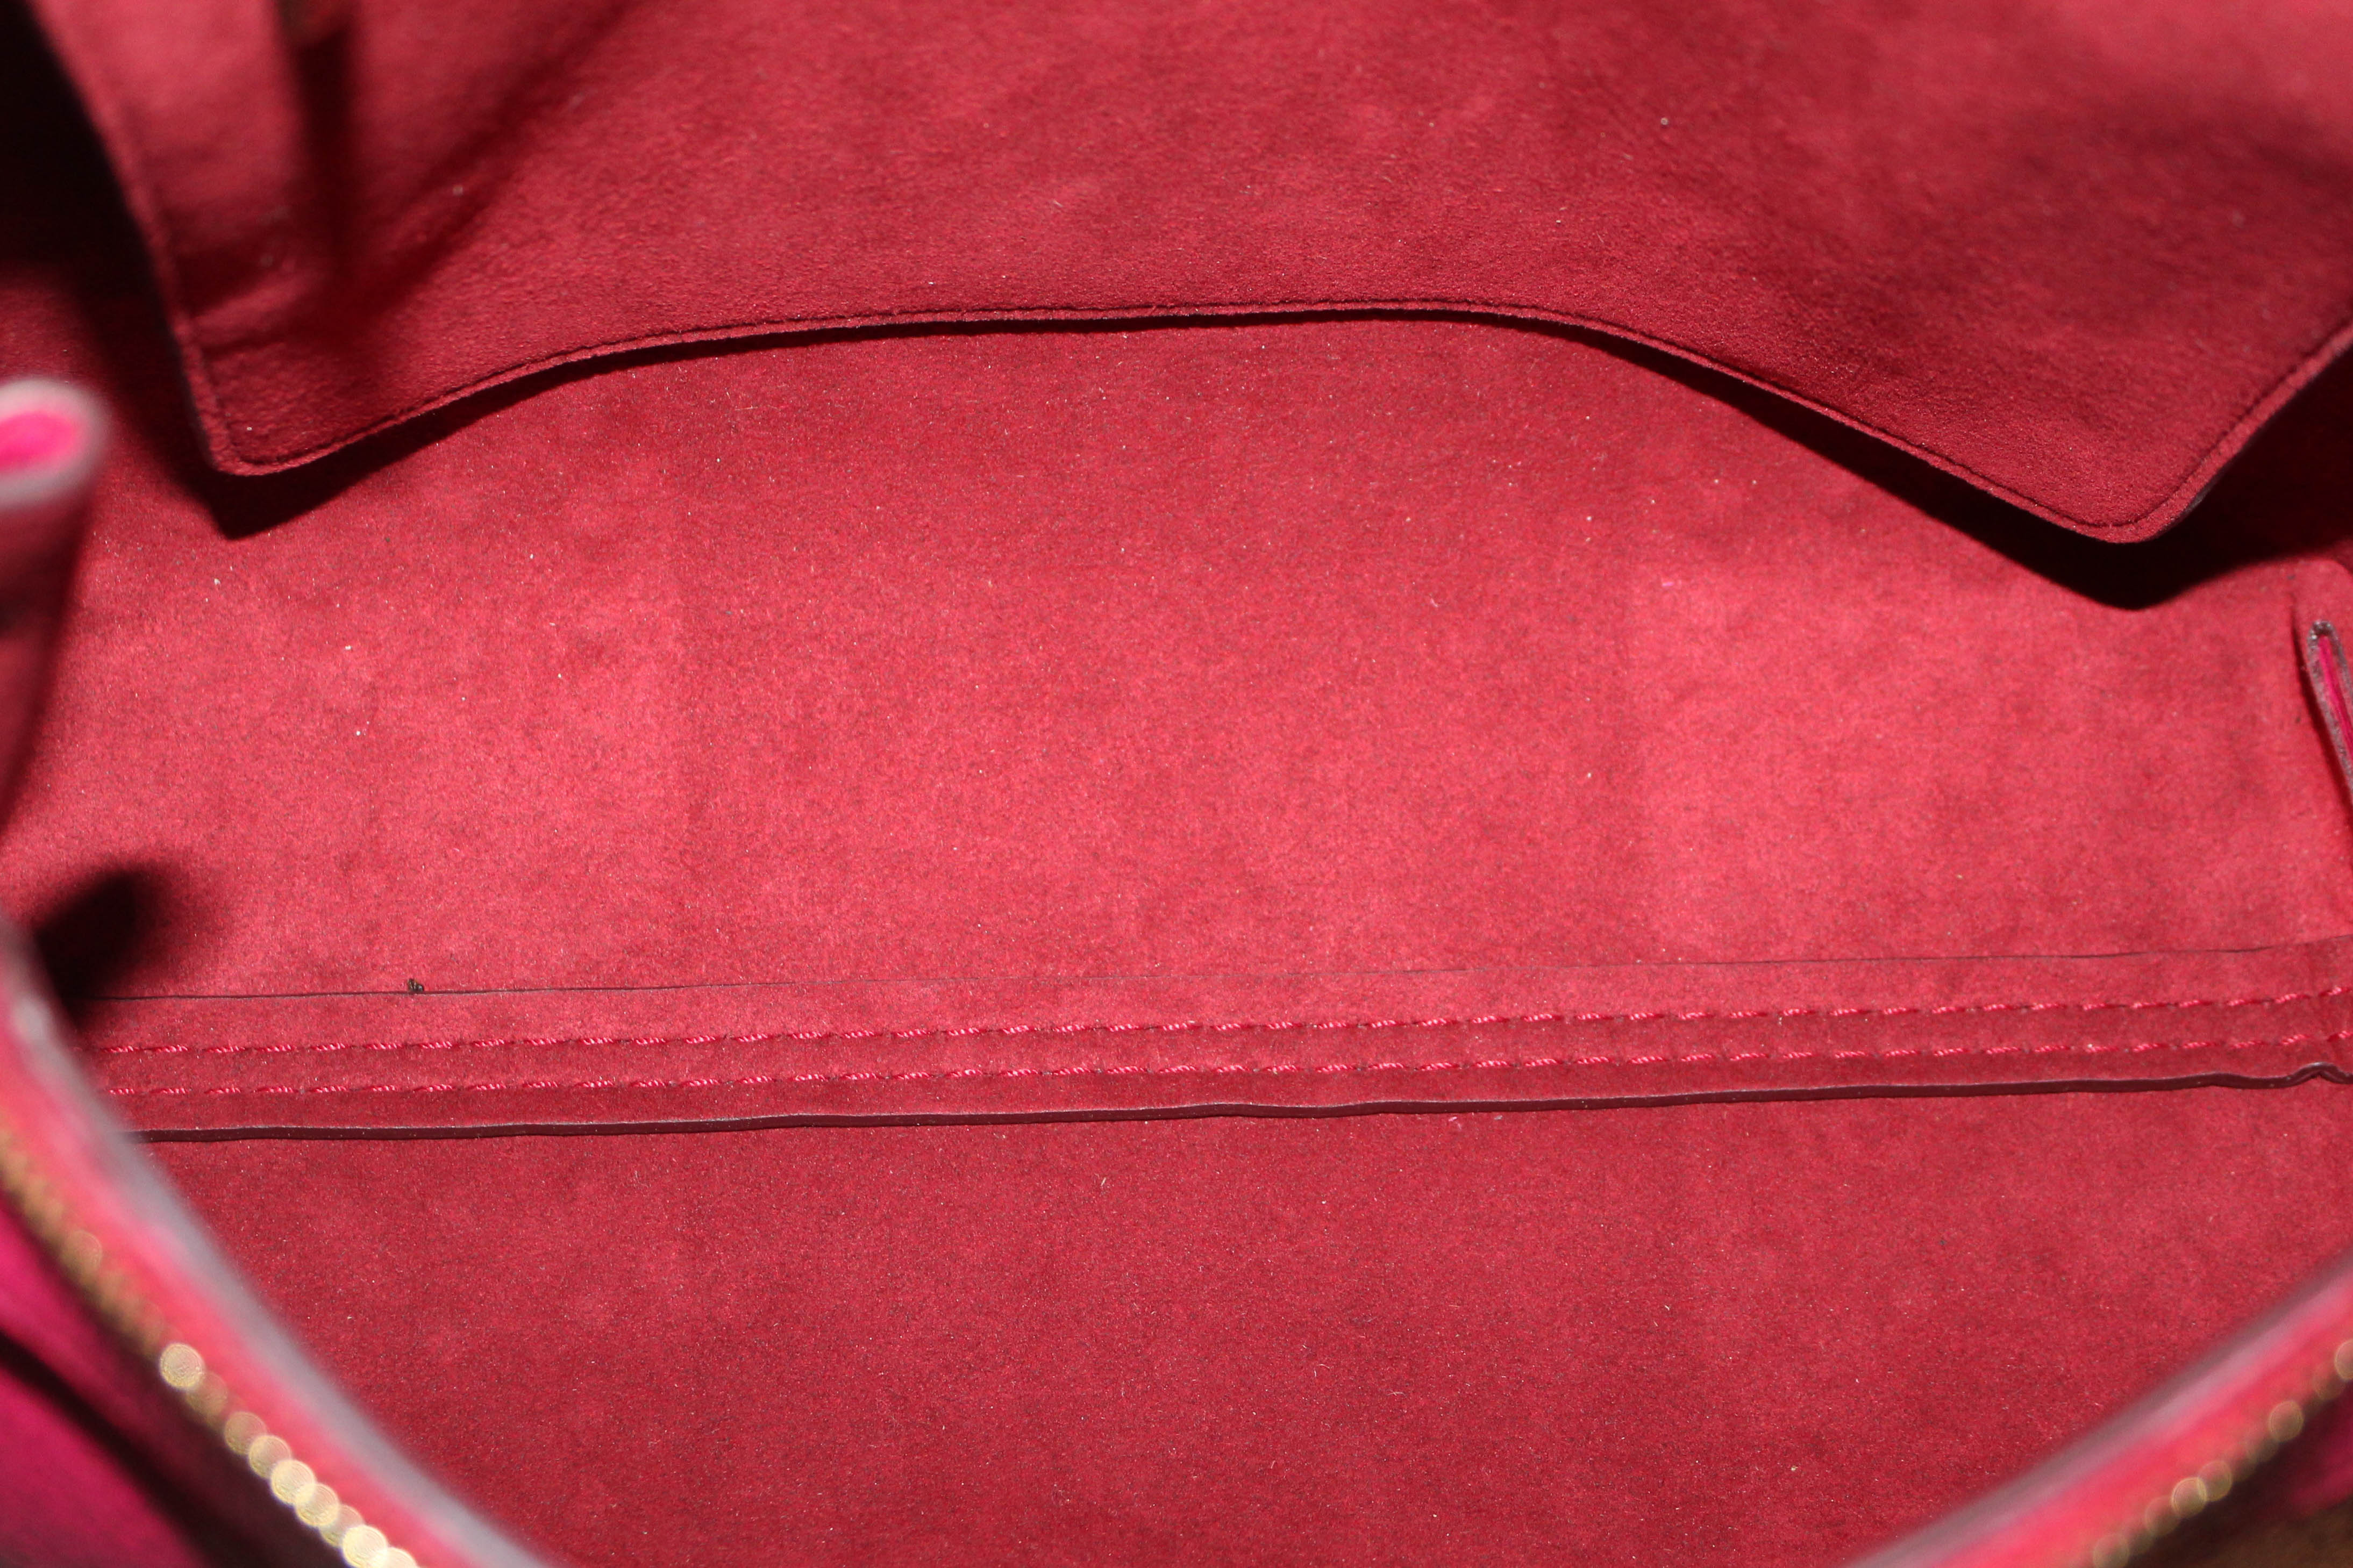 Authentic Tod's Fuchsia Pink Leather Patta Monospalla Tote Bag